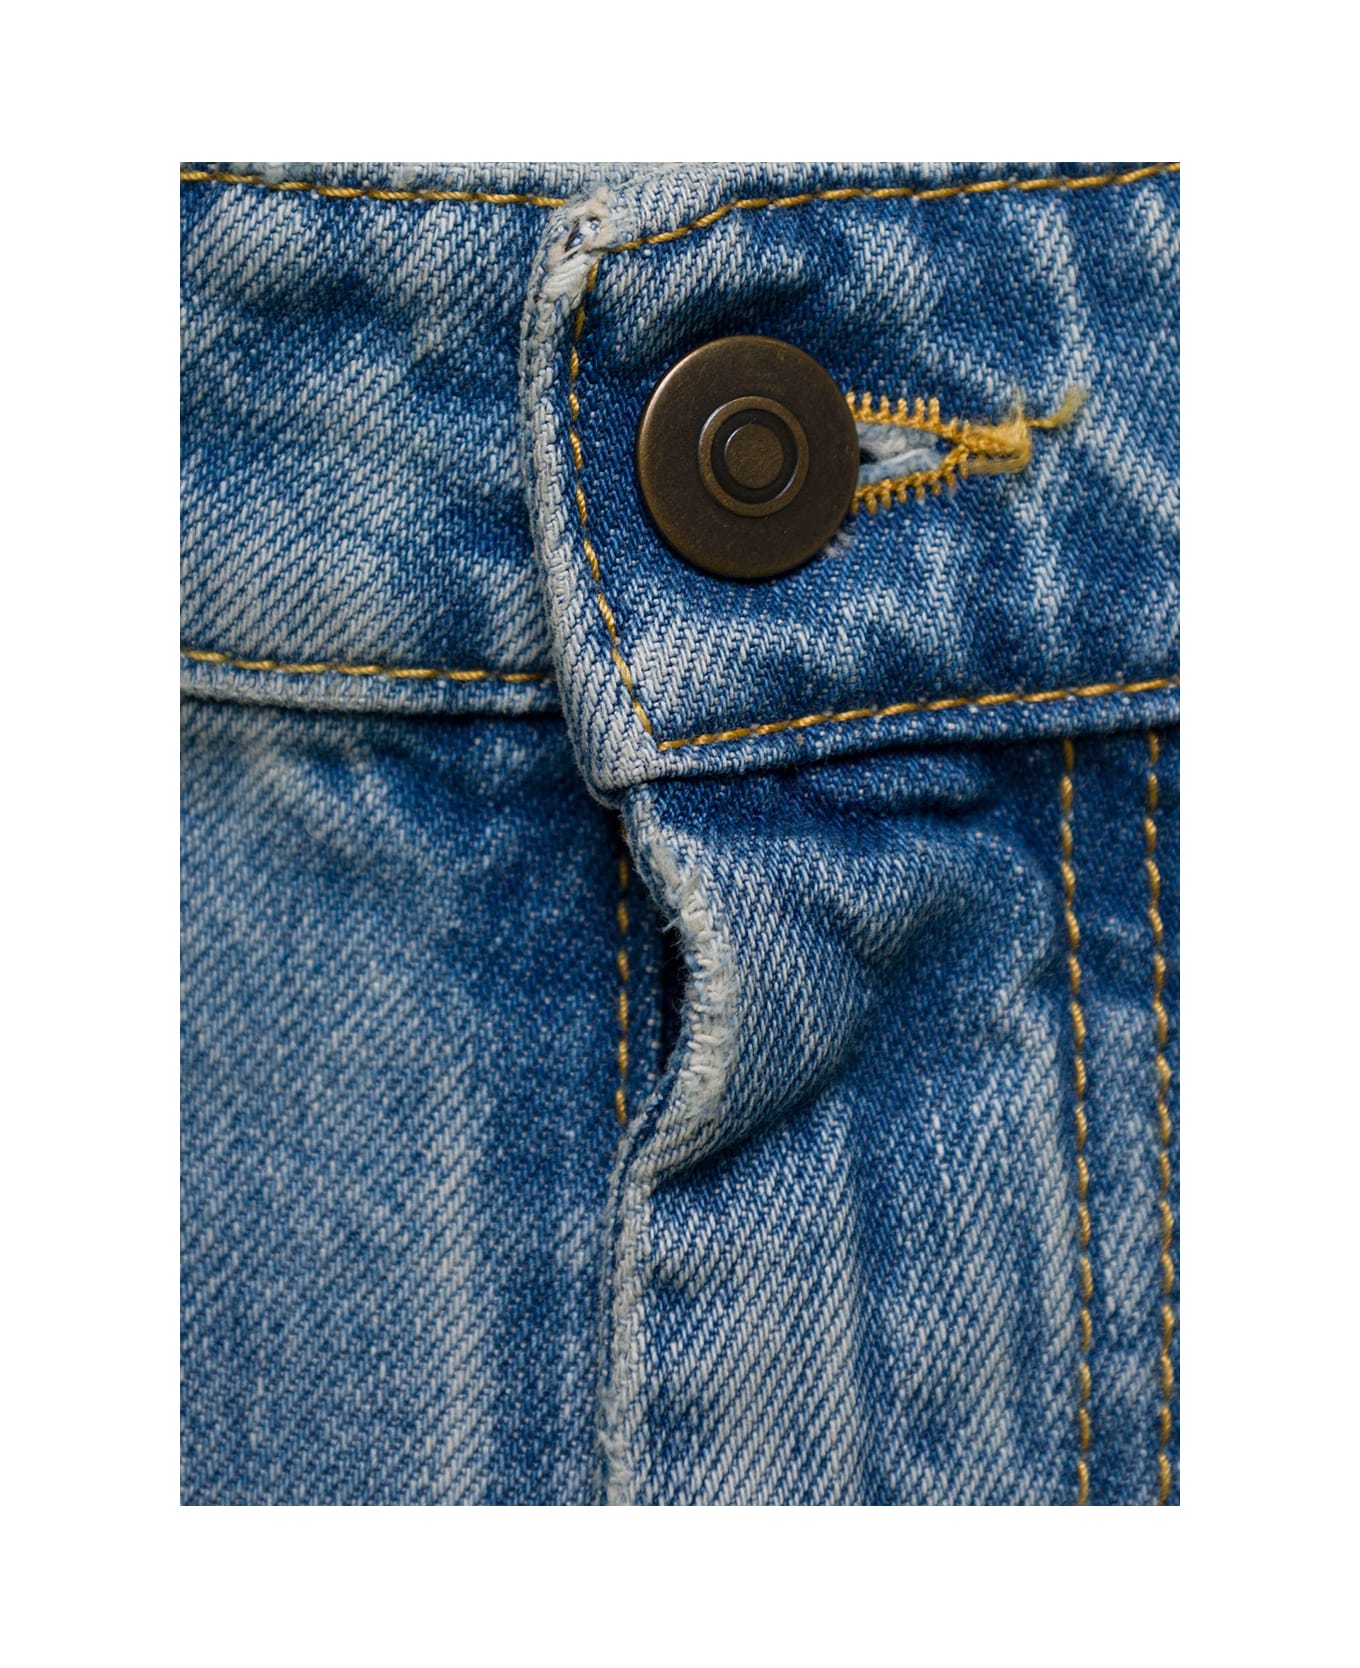 Maison Margiela Pants 5 Pockets - Light blue